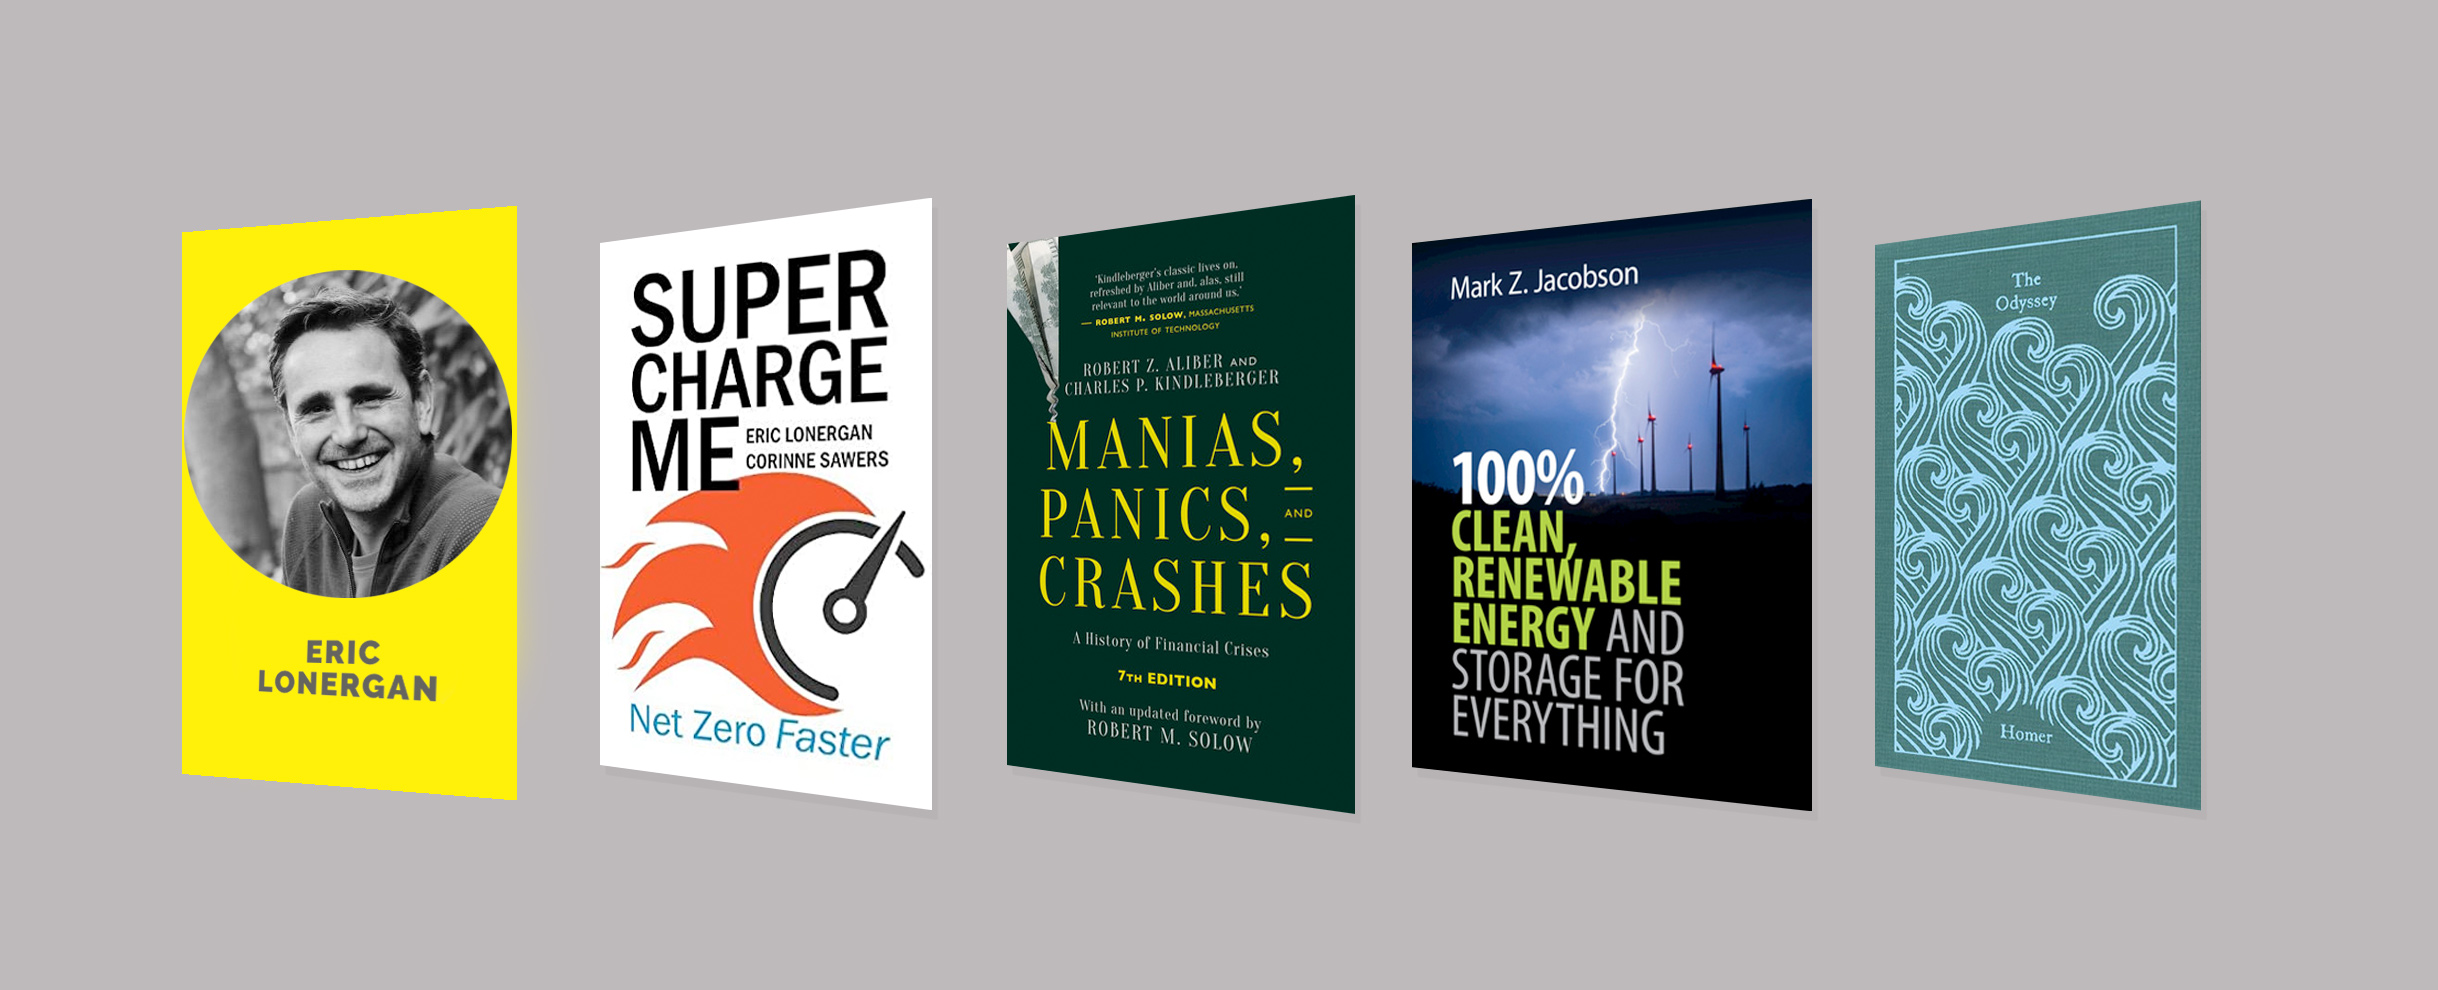 Eric Lonergan, author of Supercharge Me: Net Zero Faster